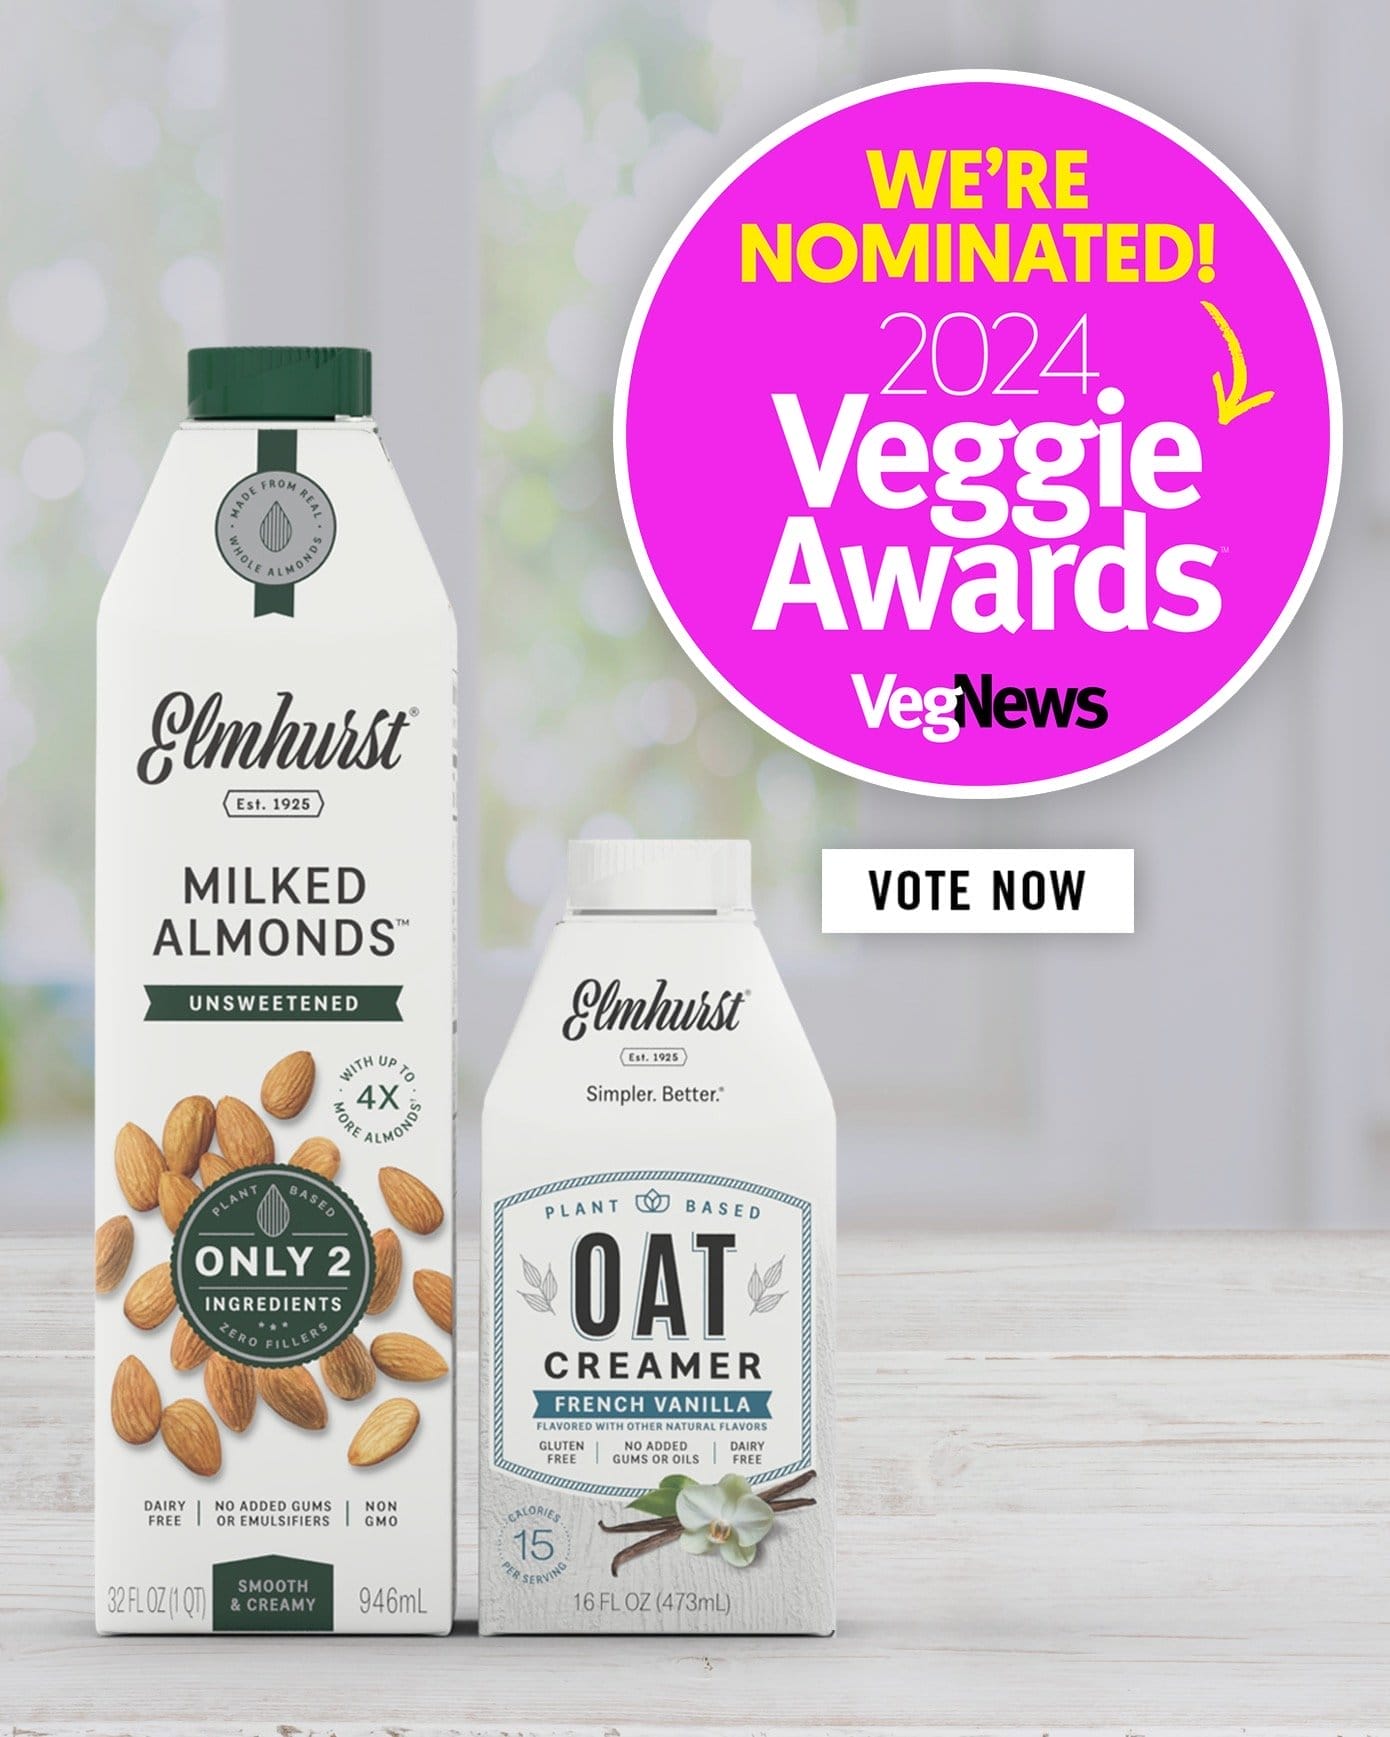 We're nominated 2024 veggie awards - vote now